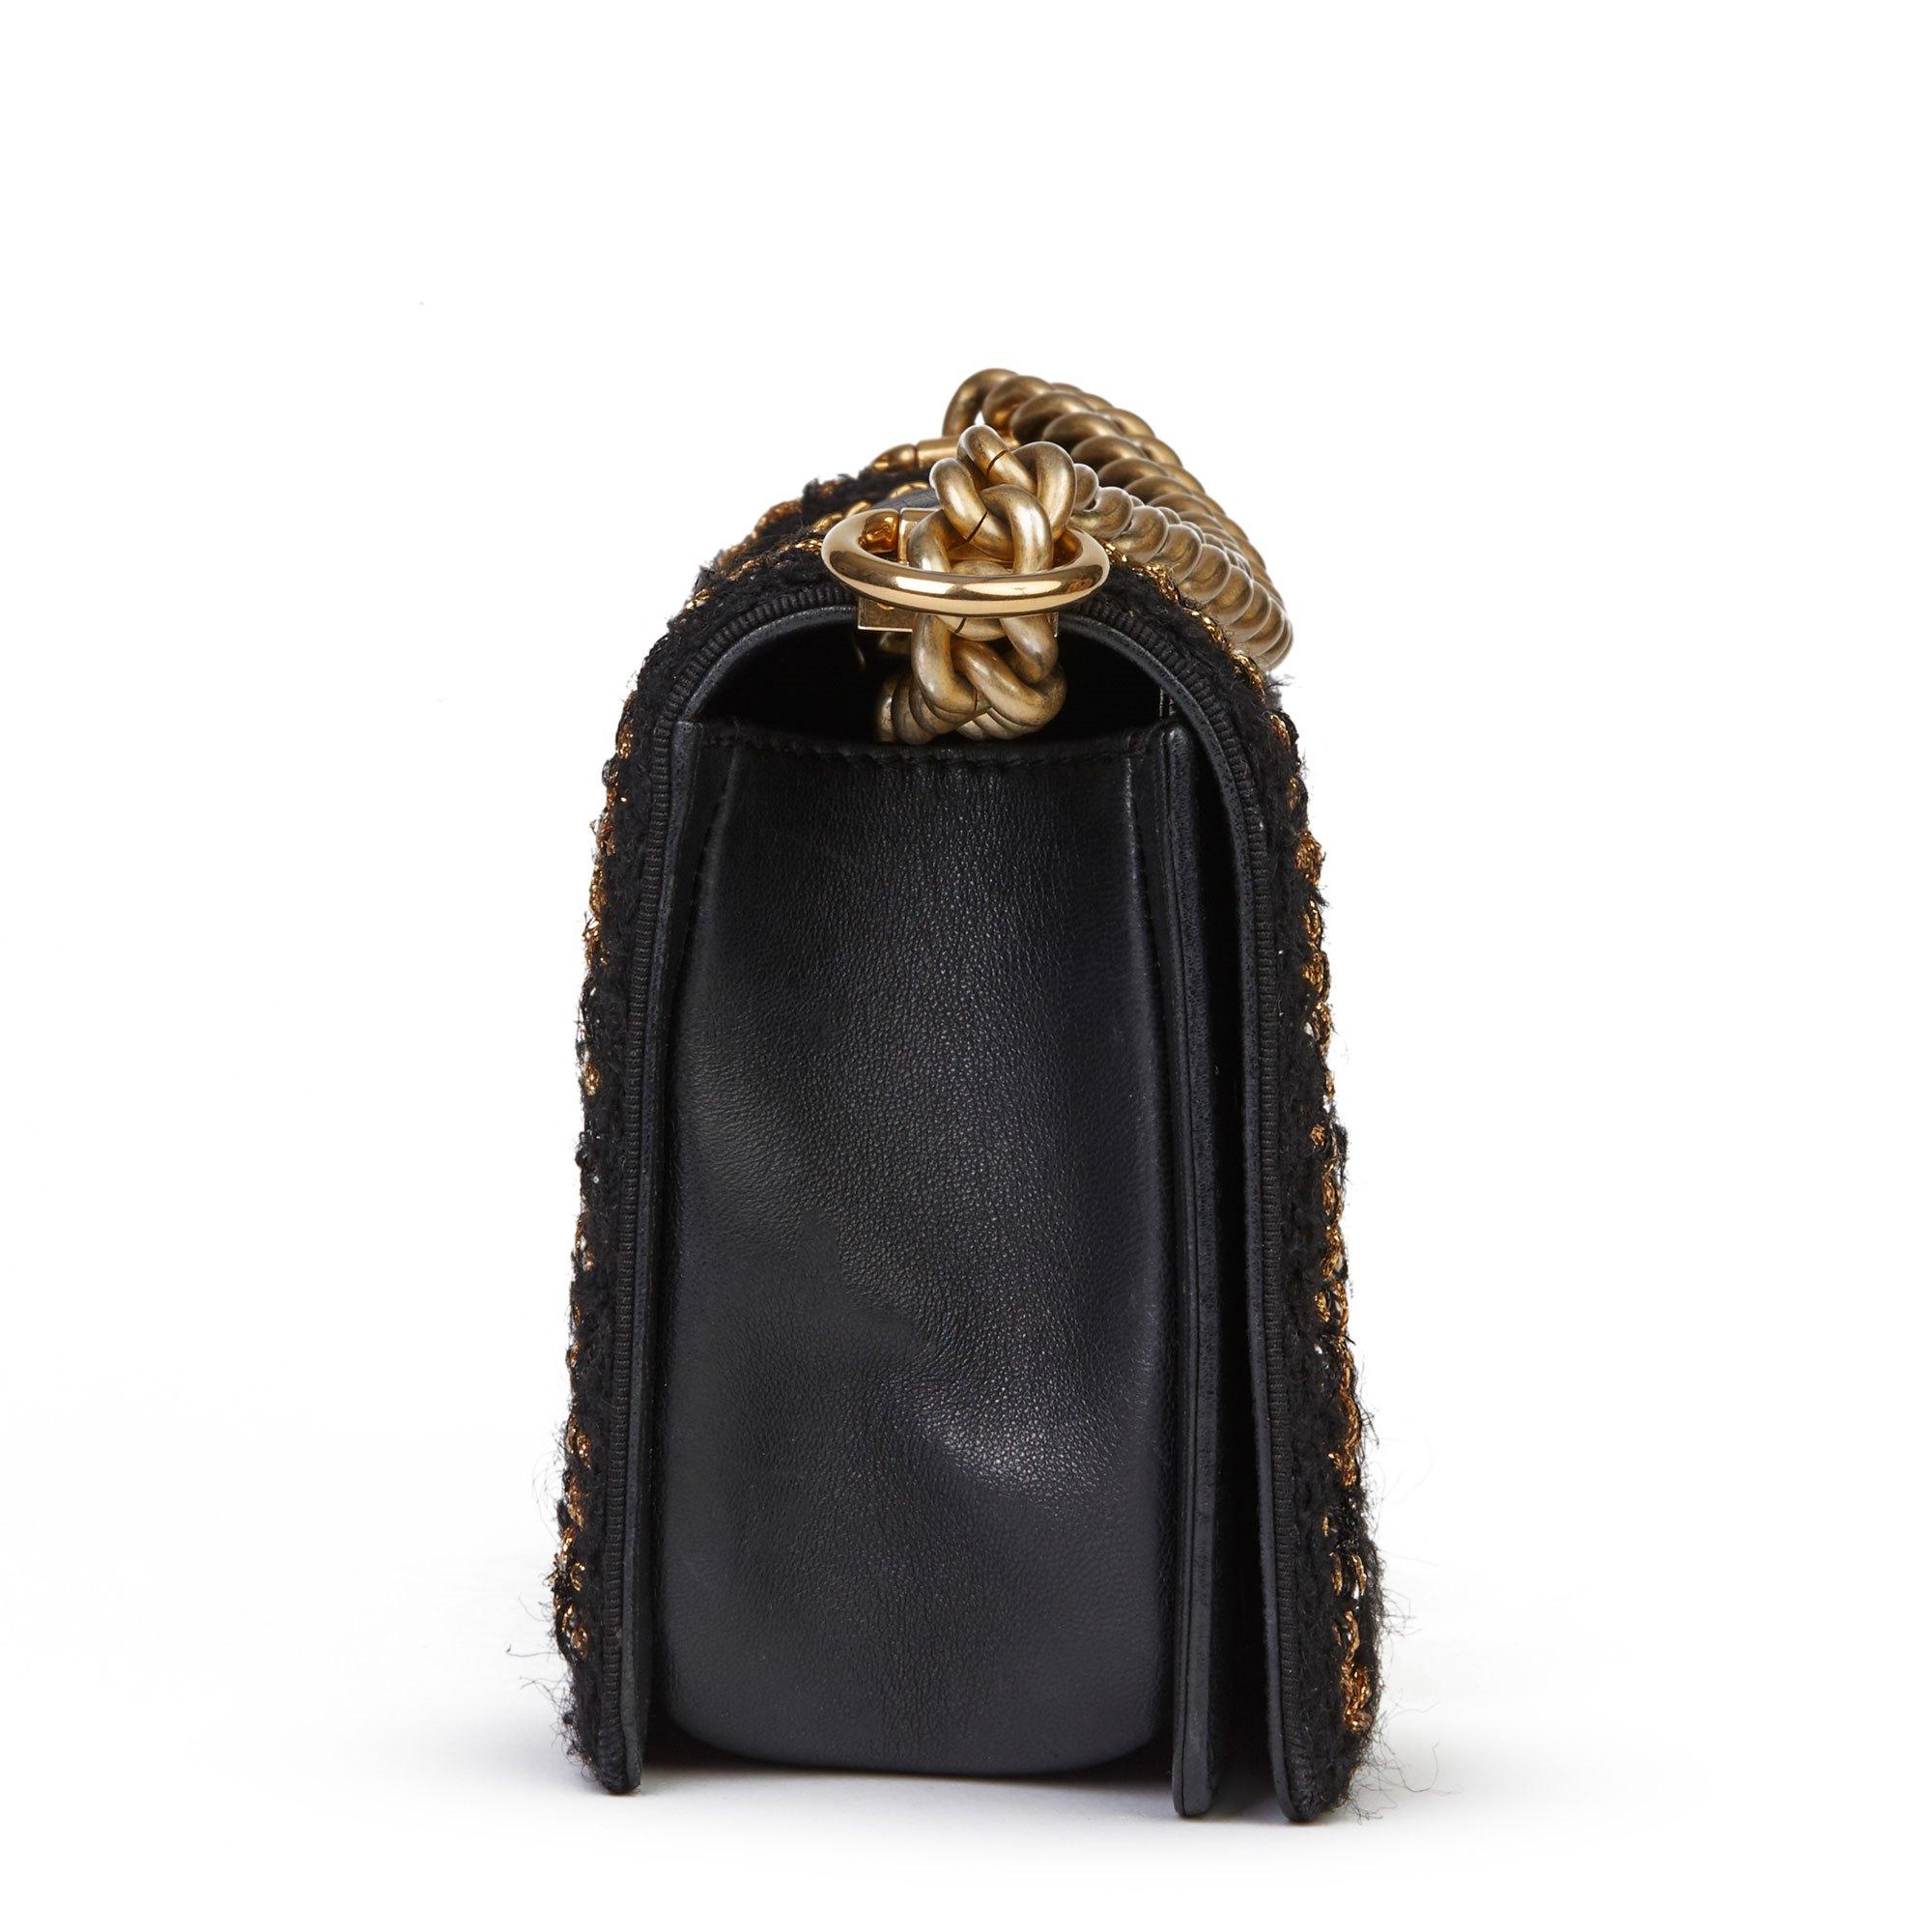 Chanel boy medium bag black and gold 1